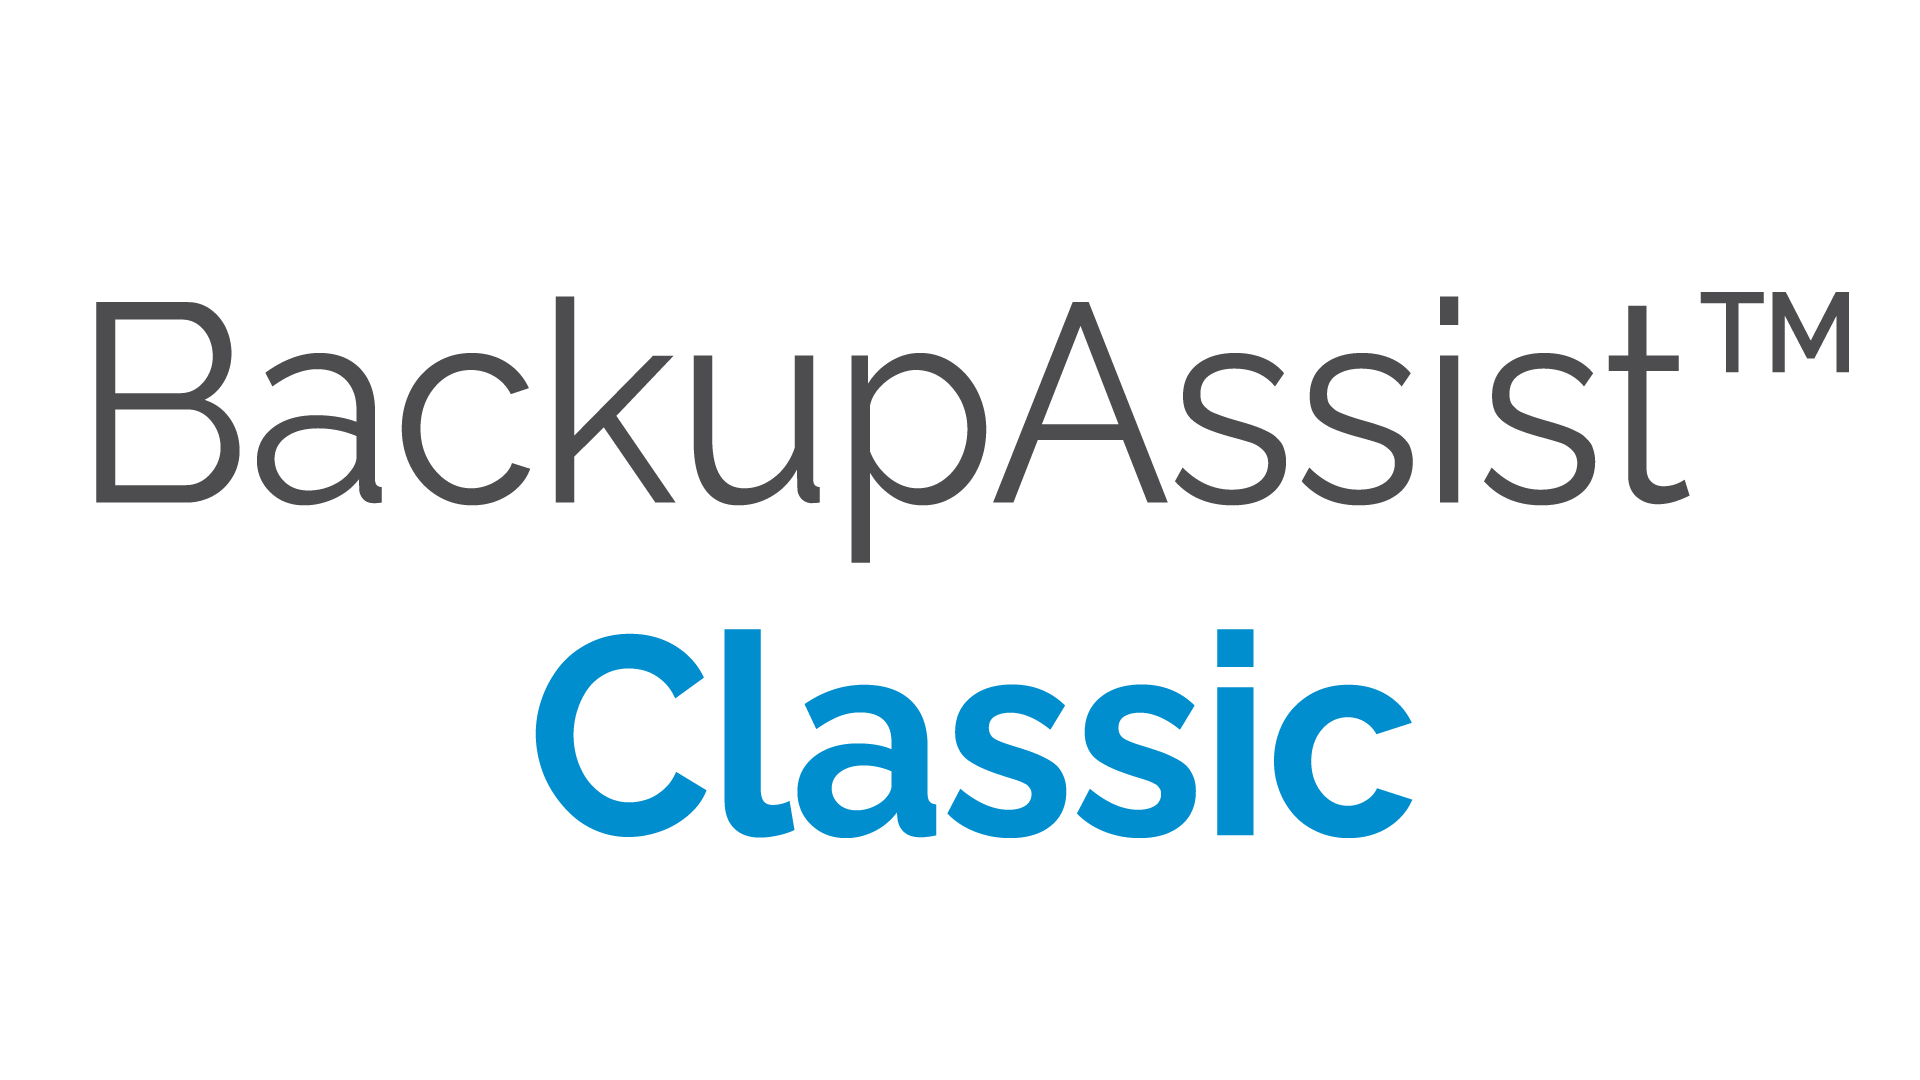 BackupAssist Classic 12.0.6 instaling